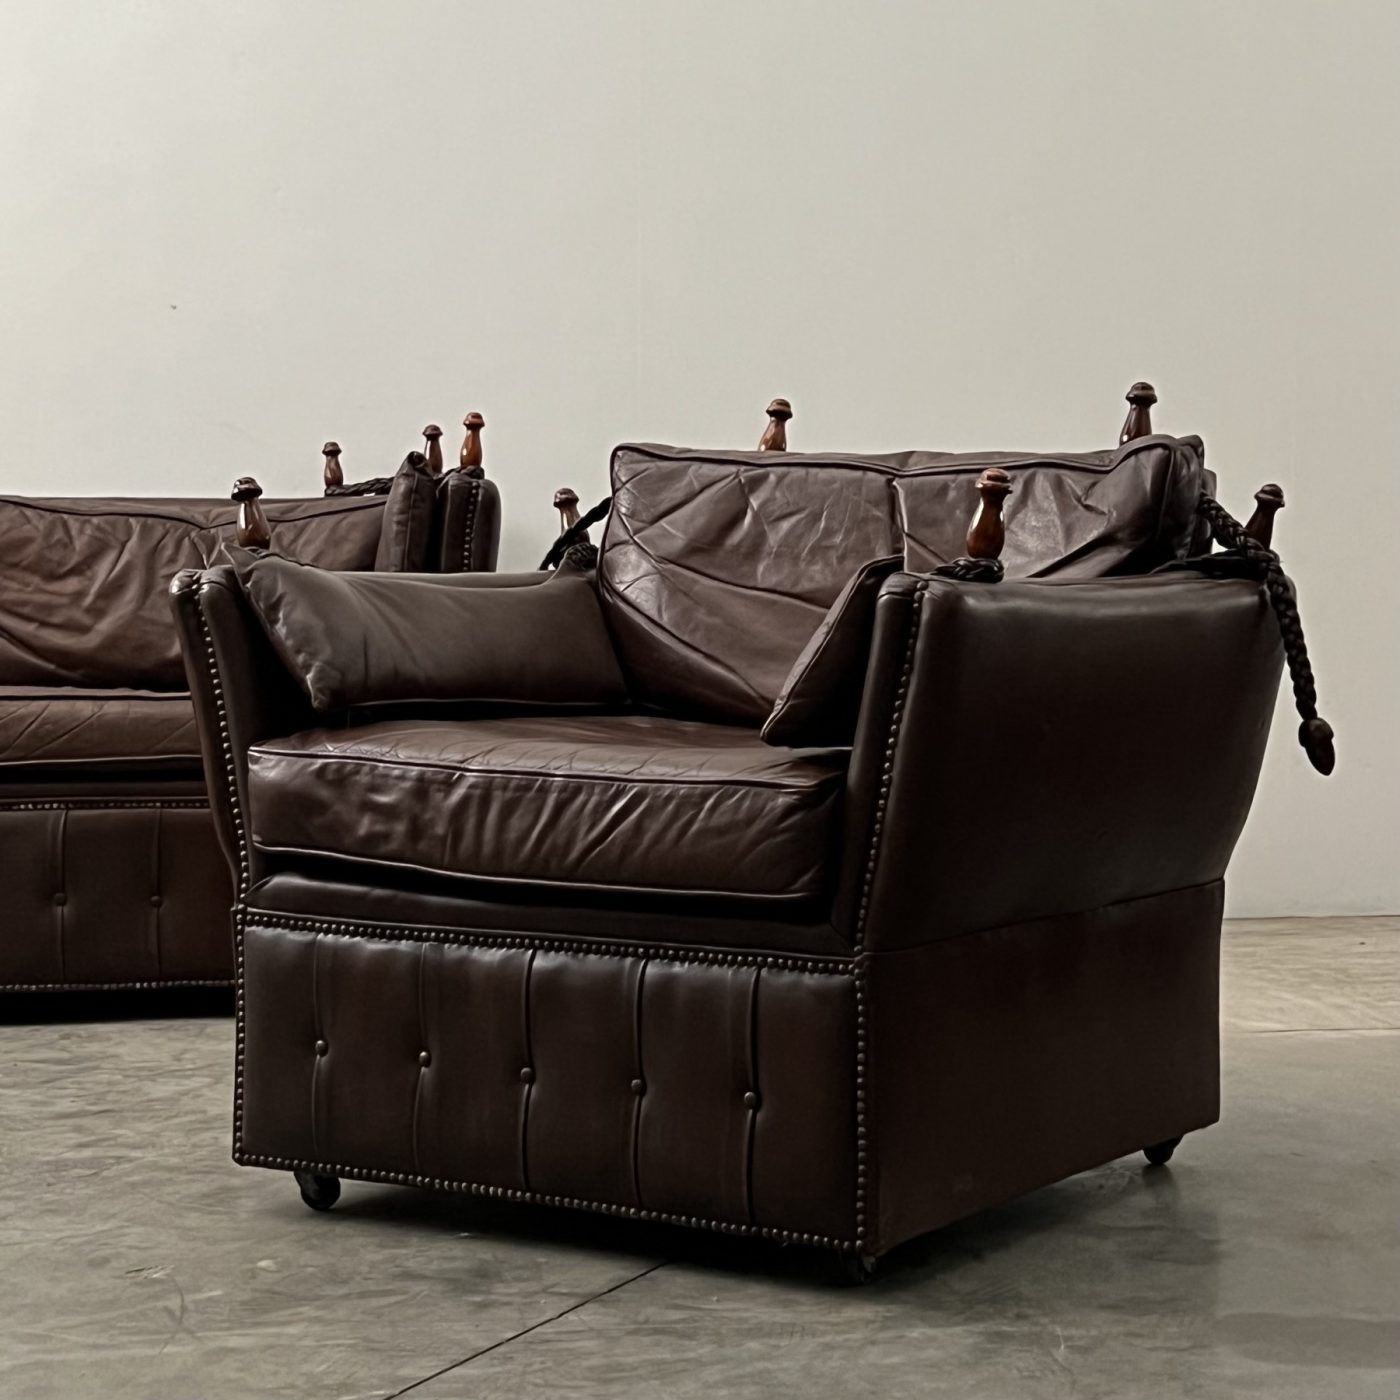 objet-vagabond-leather-set0006